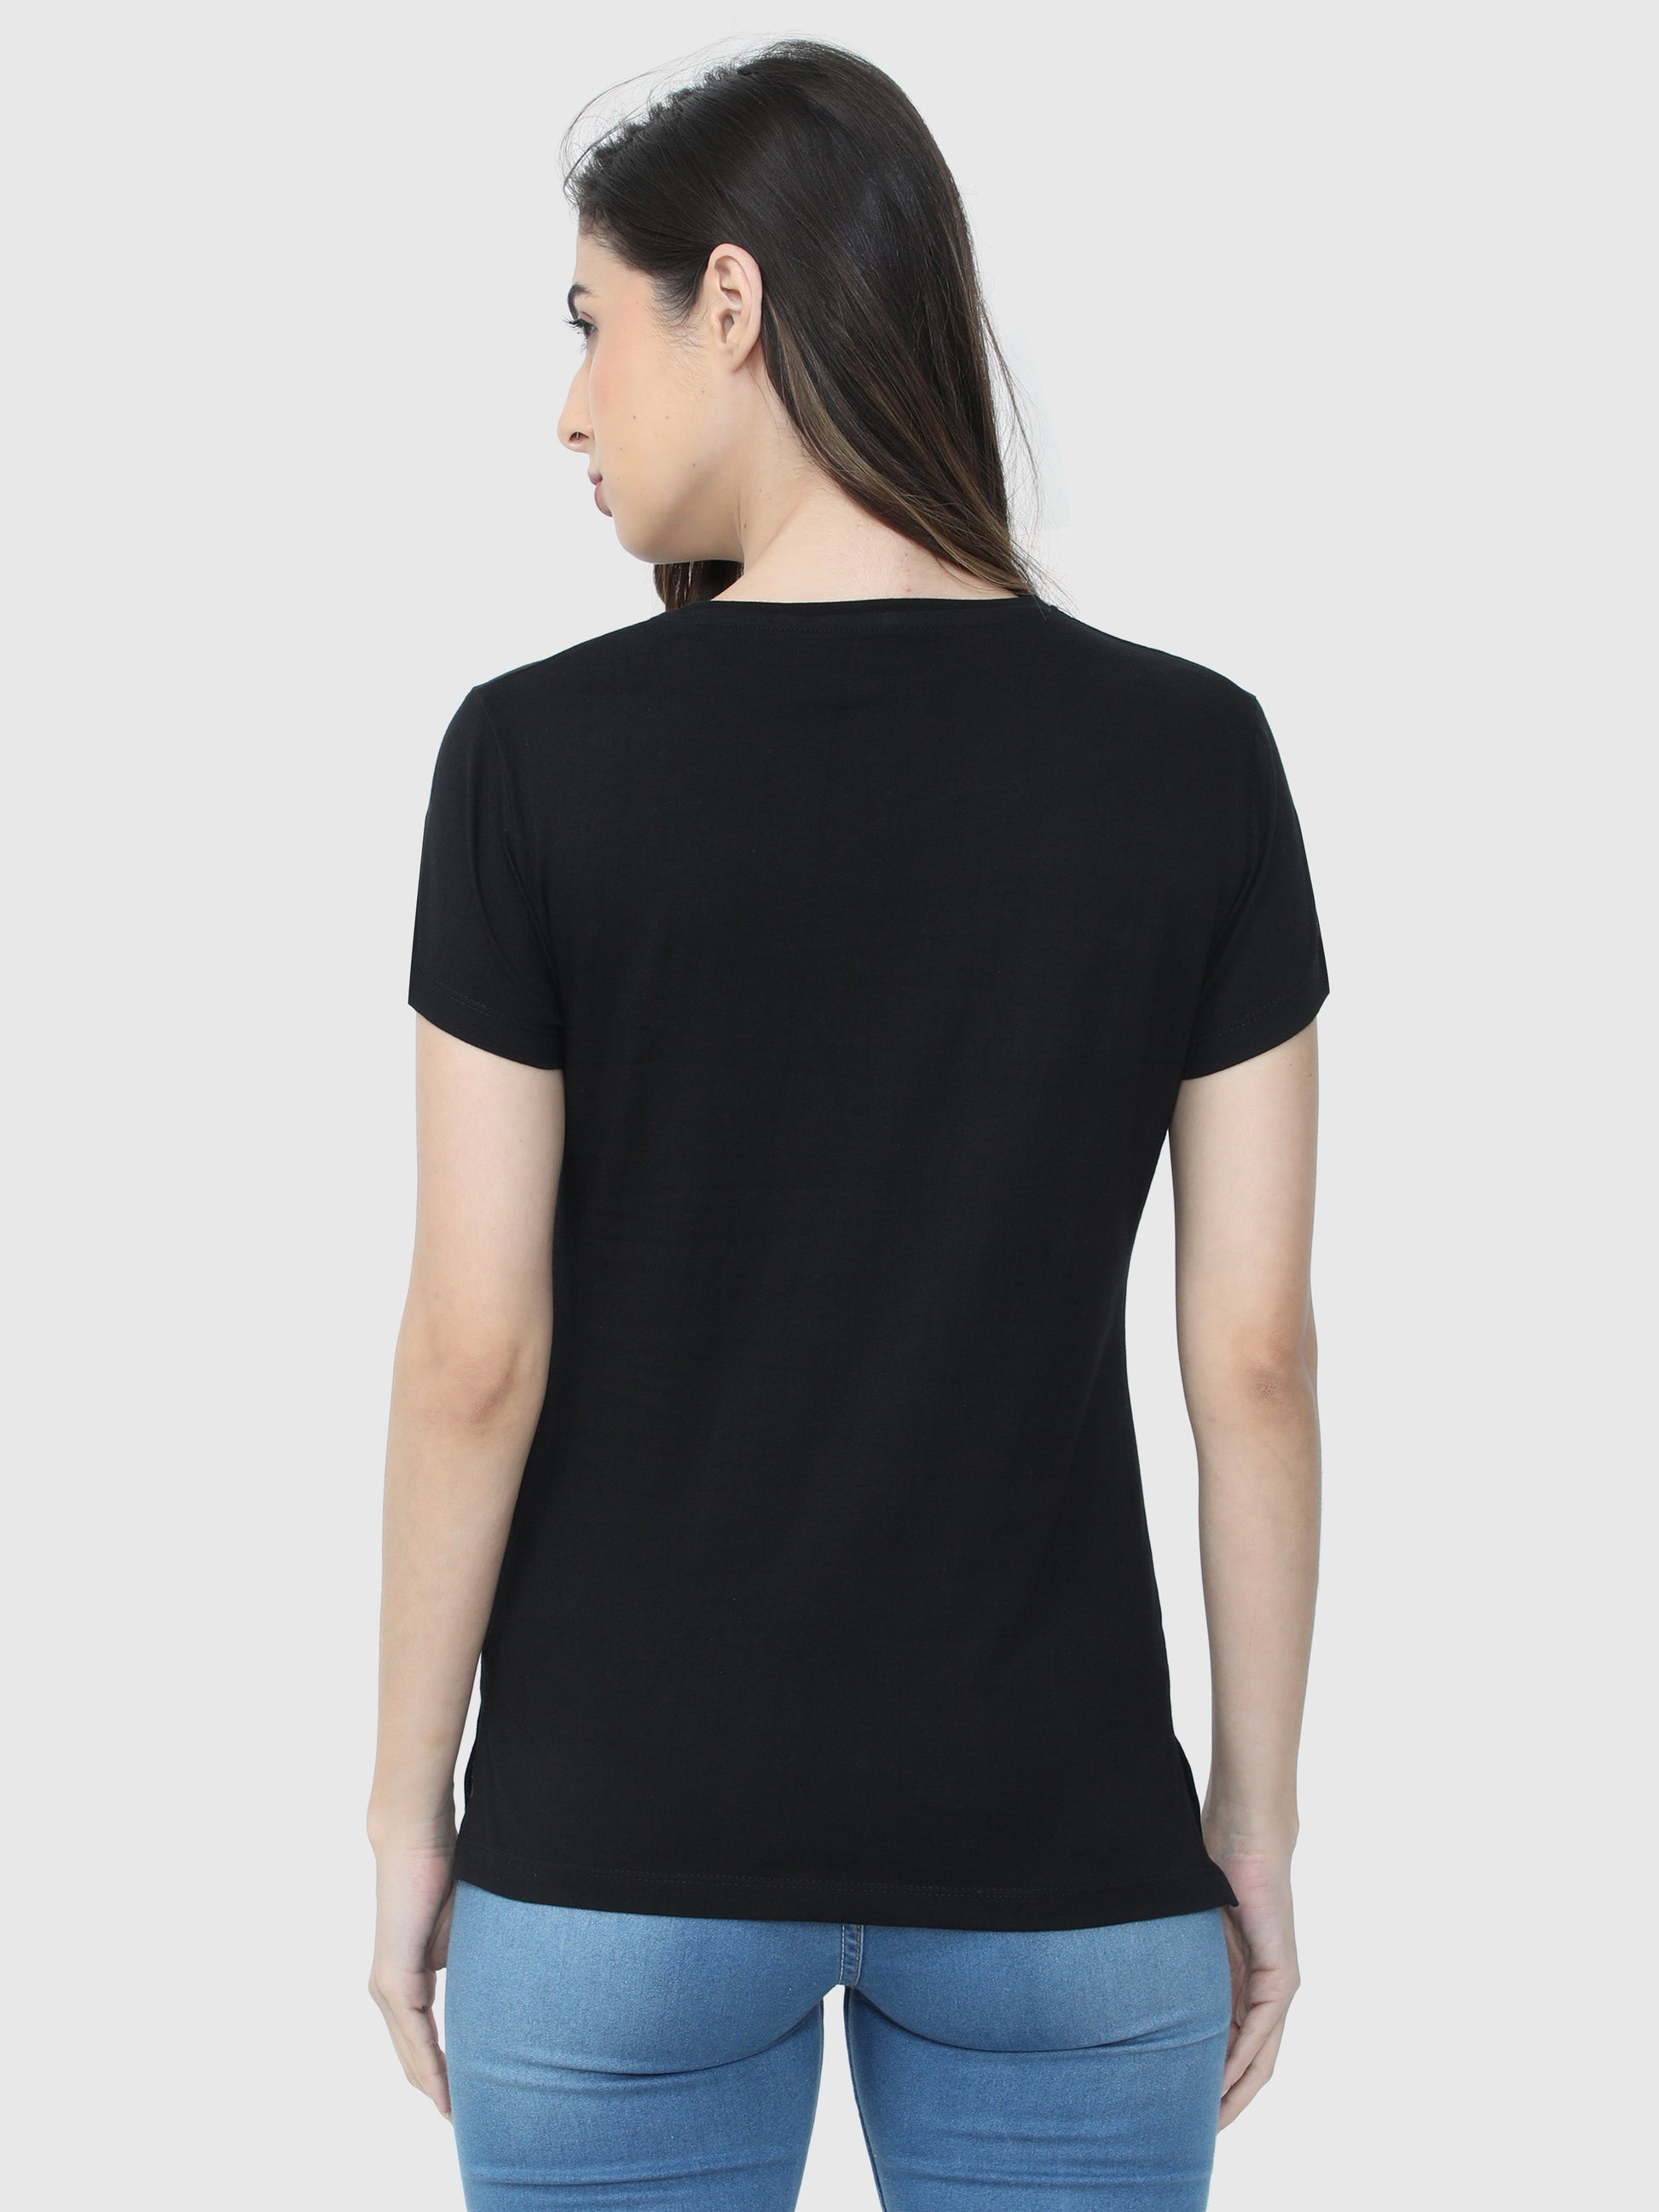 Raven Black Printed T-Shirt CWTP-17012